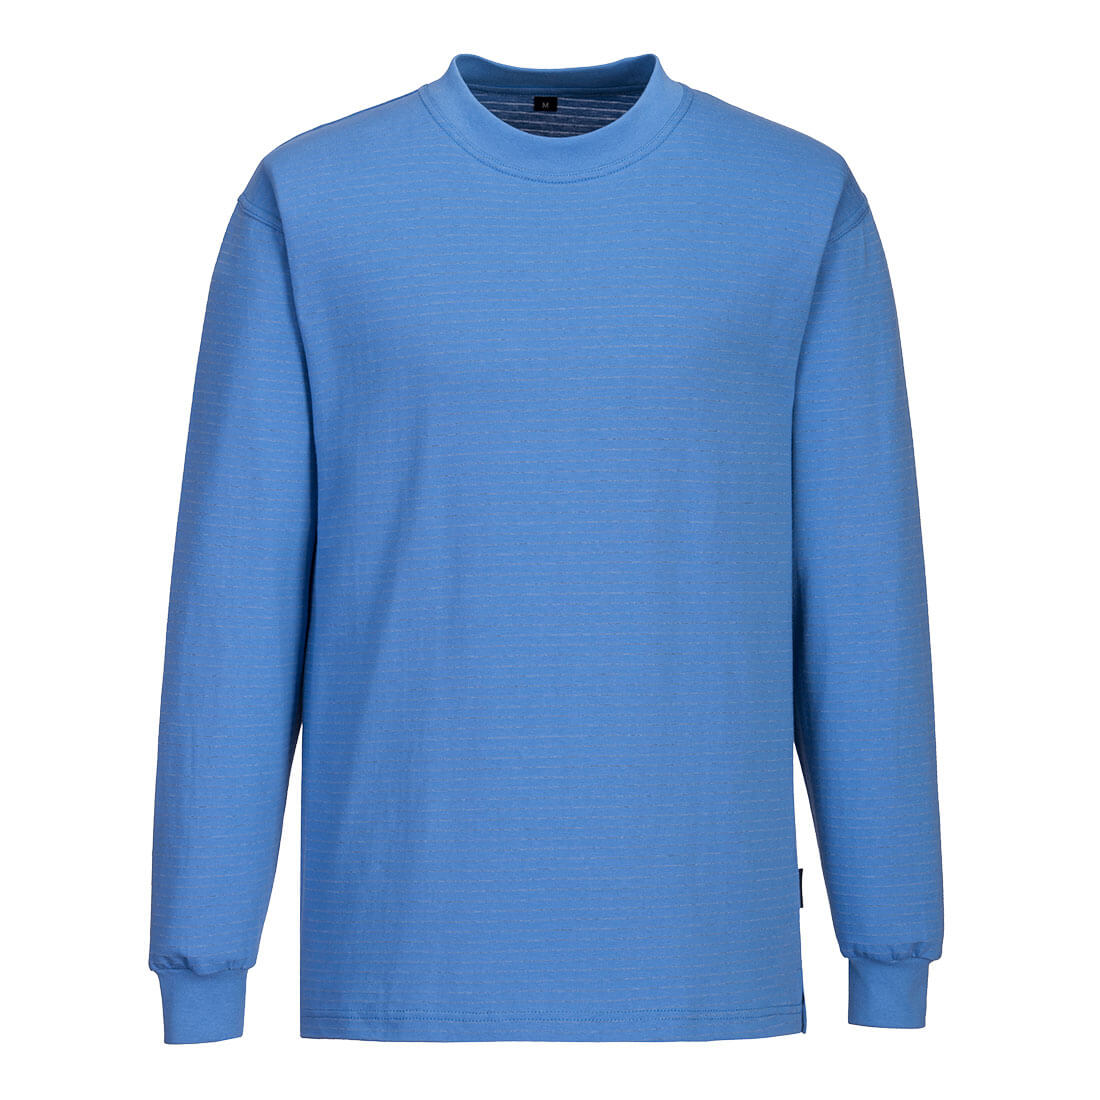 Antistatické ESD tričko s dlouhým rukávem Barva: modrá, Velikost: S